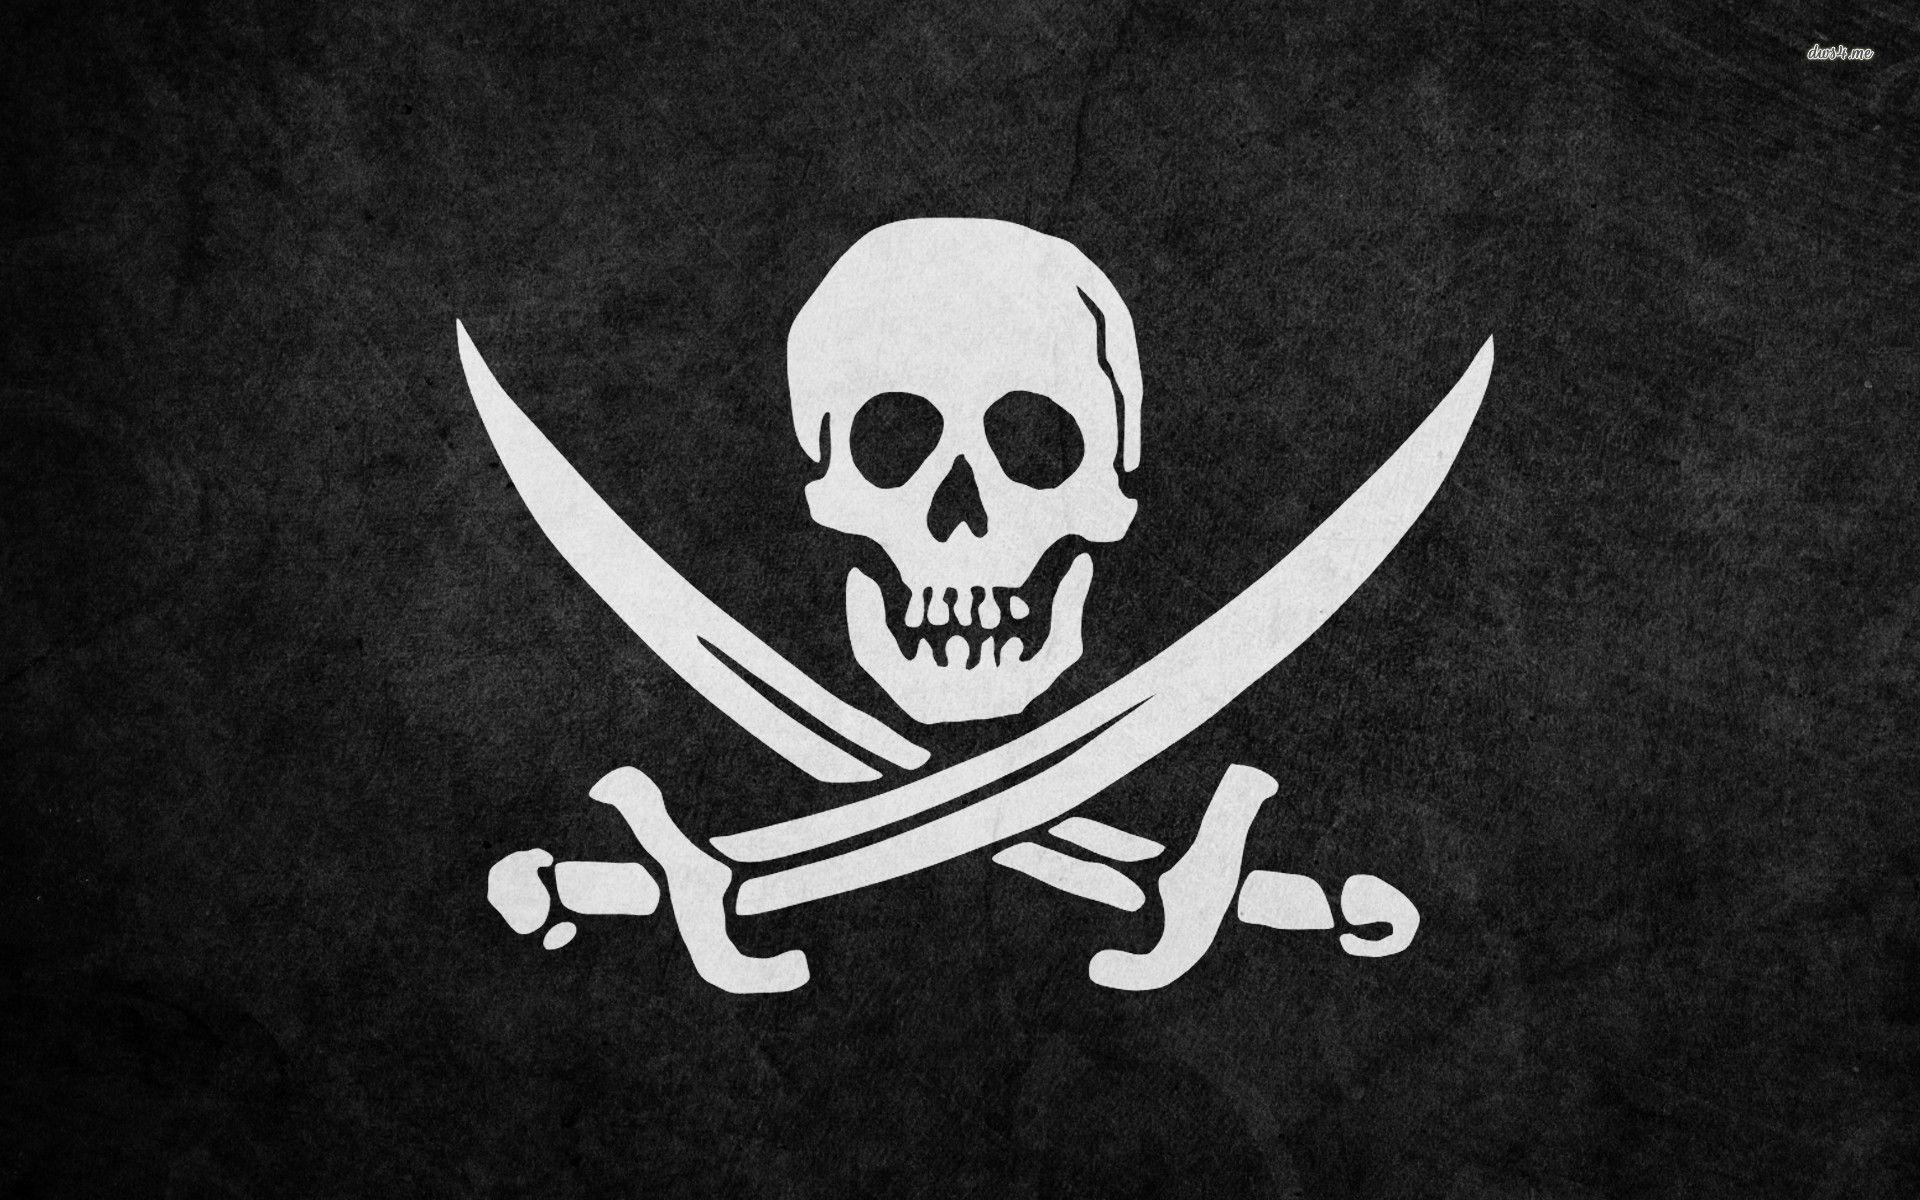 Jack Sparrow Logo Wallpapers Wallpaper Cave 7034